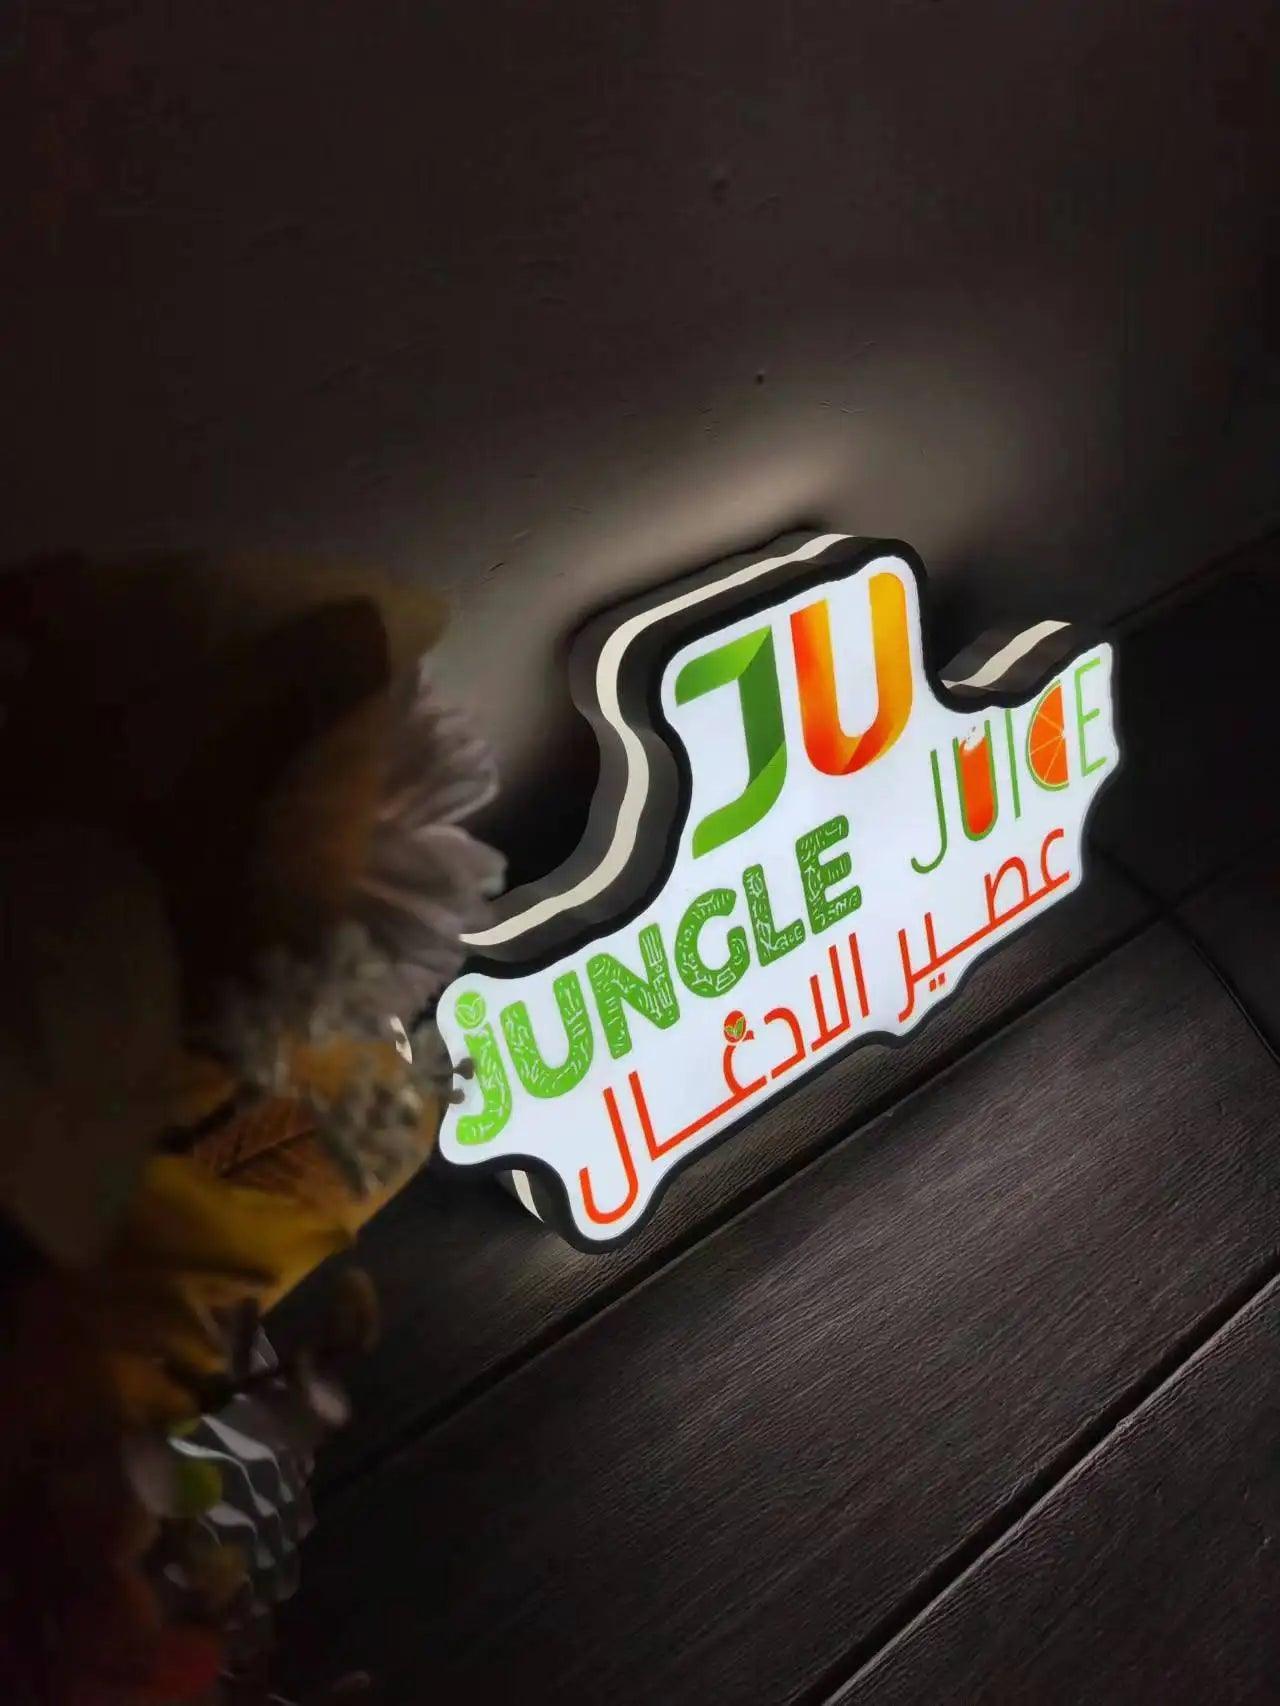 Custom Business Coffee Jungle Juice Logo LED Nightlight 3D Print Desktop Room Lightbox Wall Decor Gifts for Kids Your Name - FYLZGO Signs